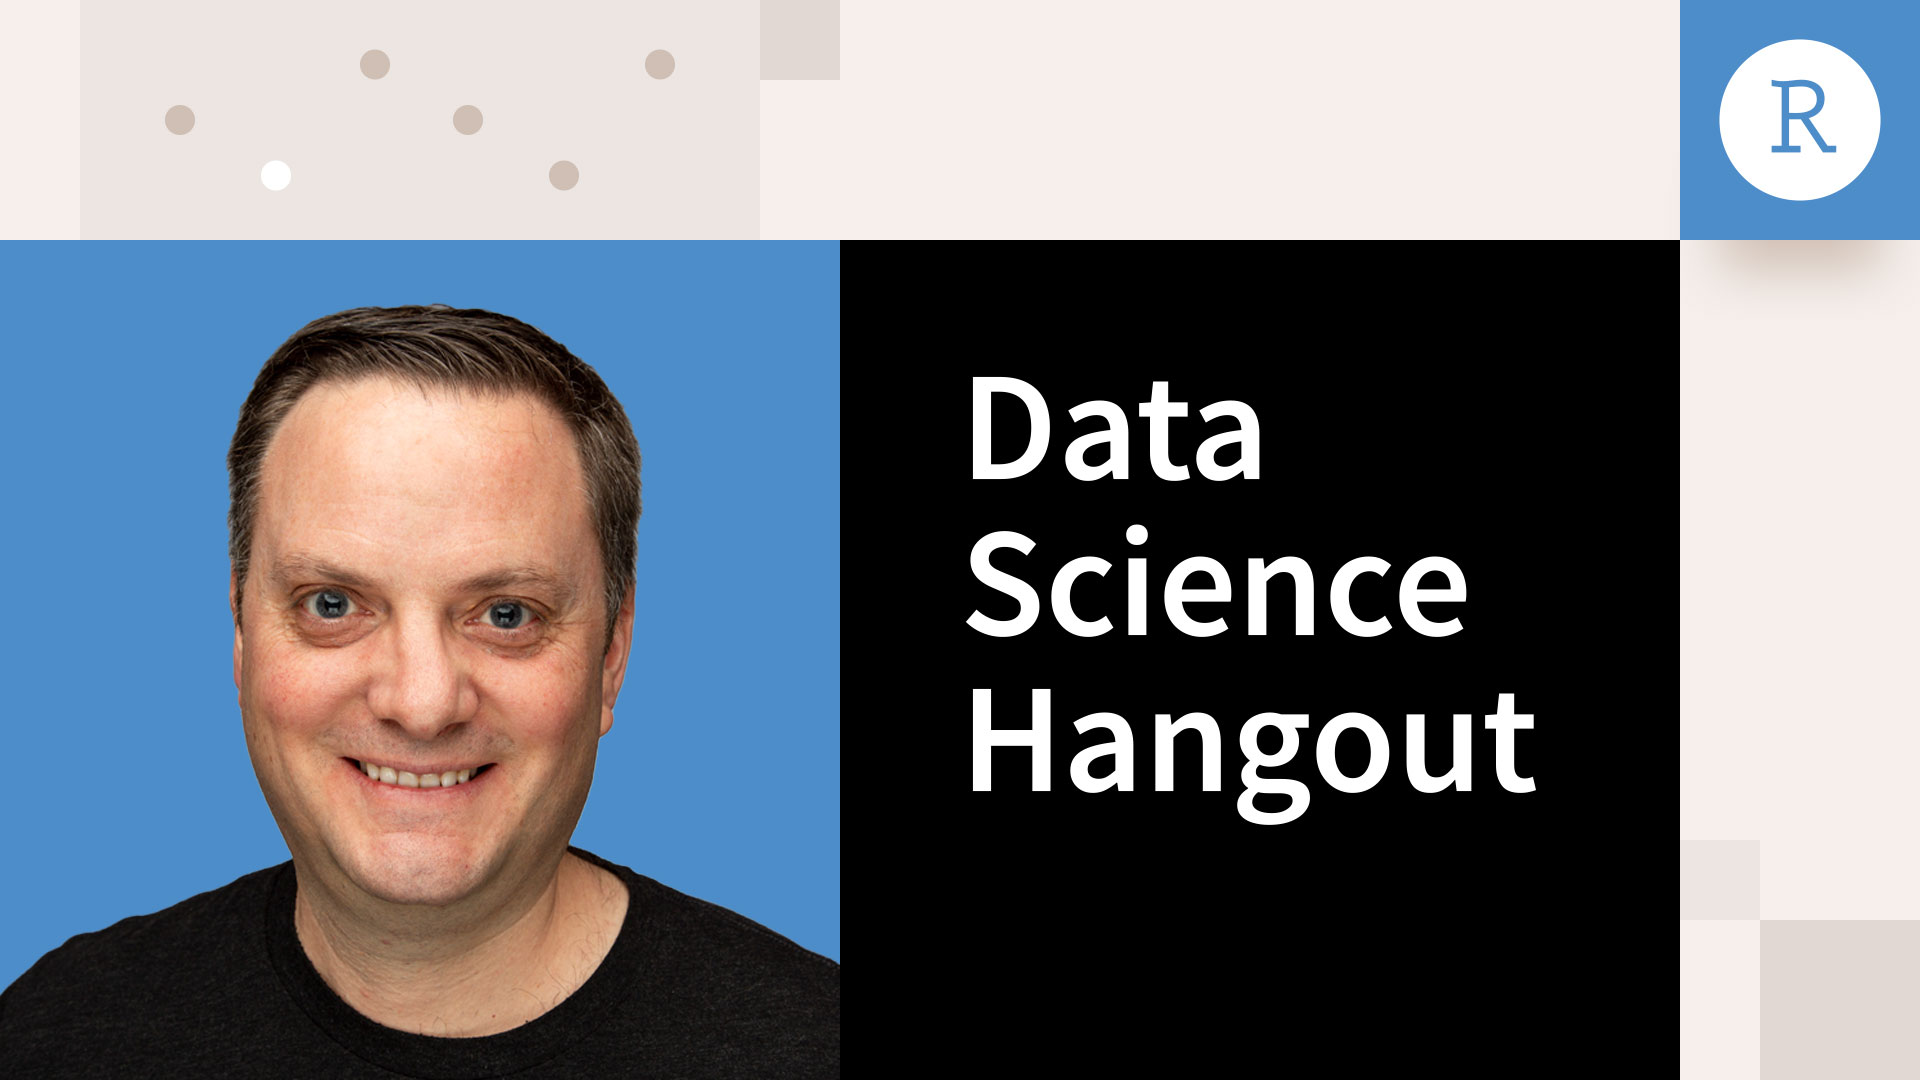 Data Science Hangout